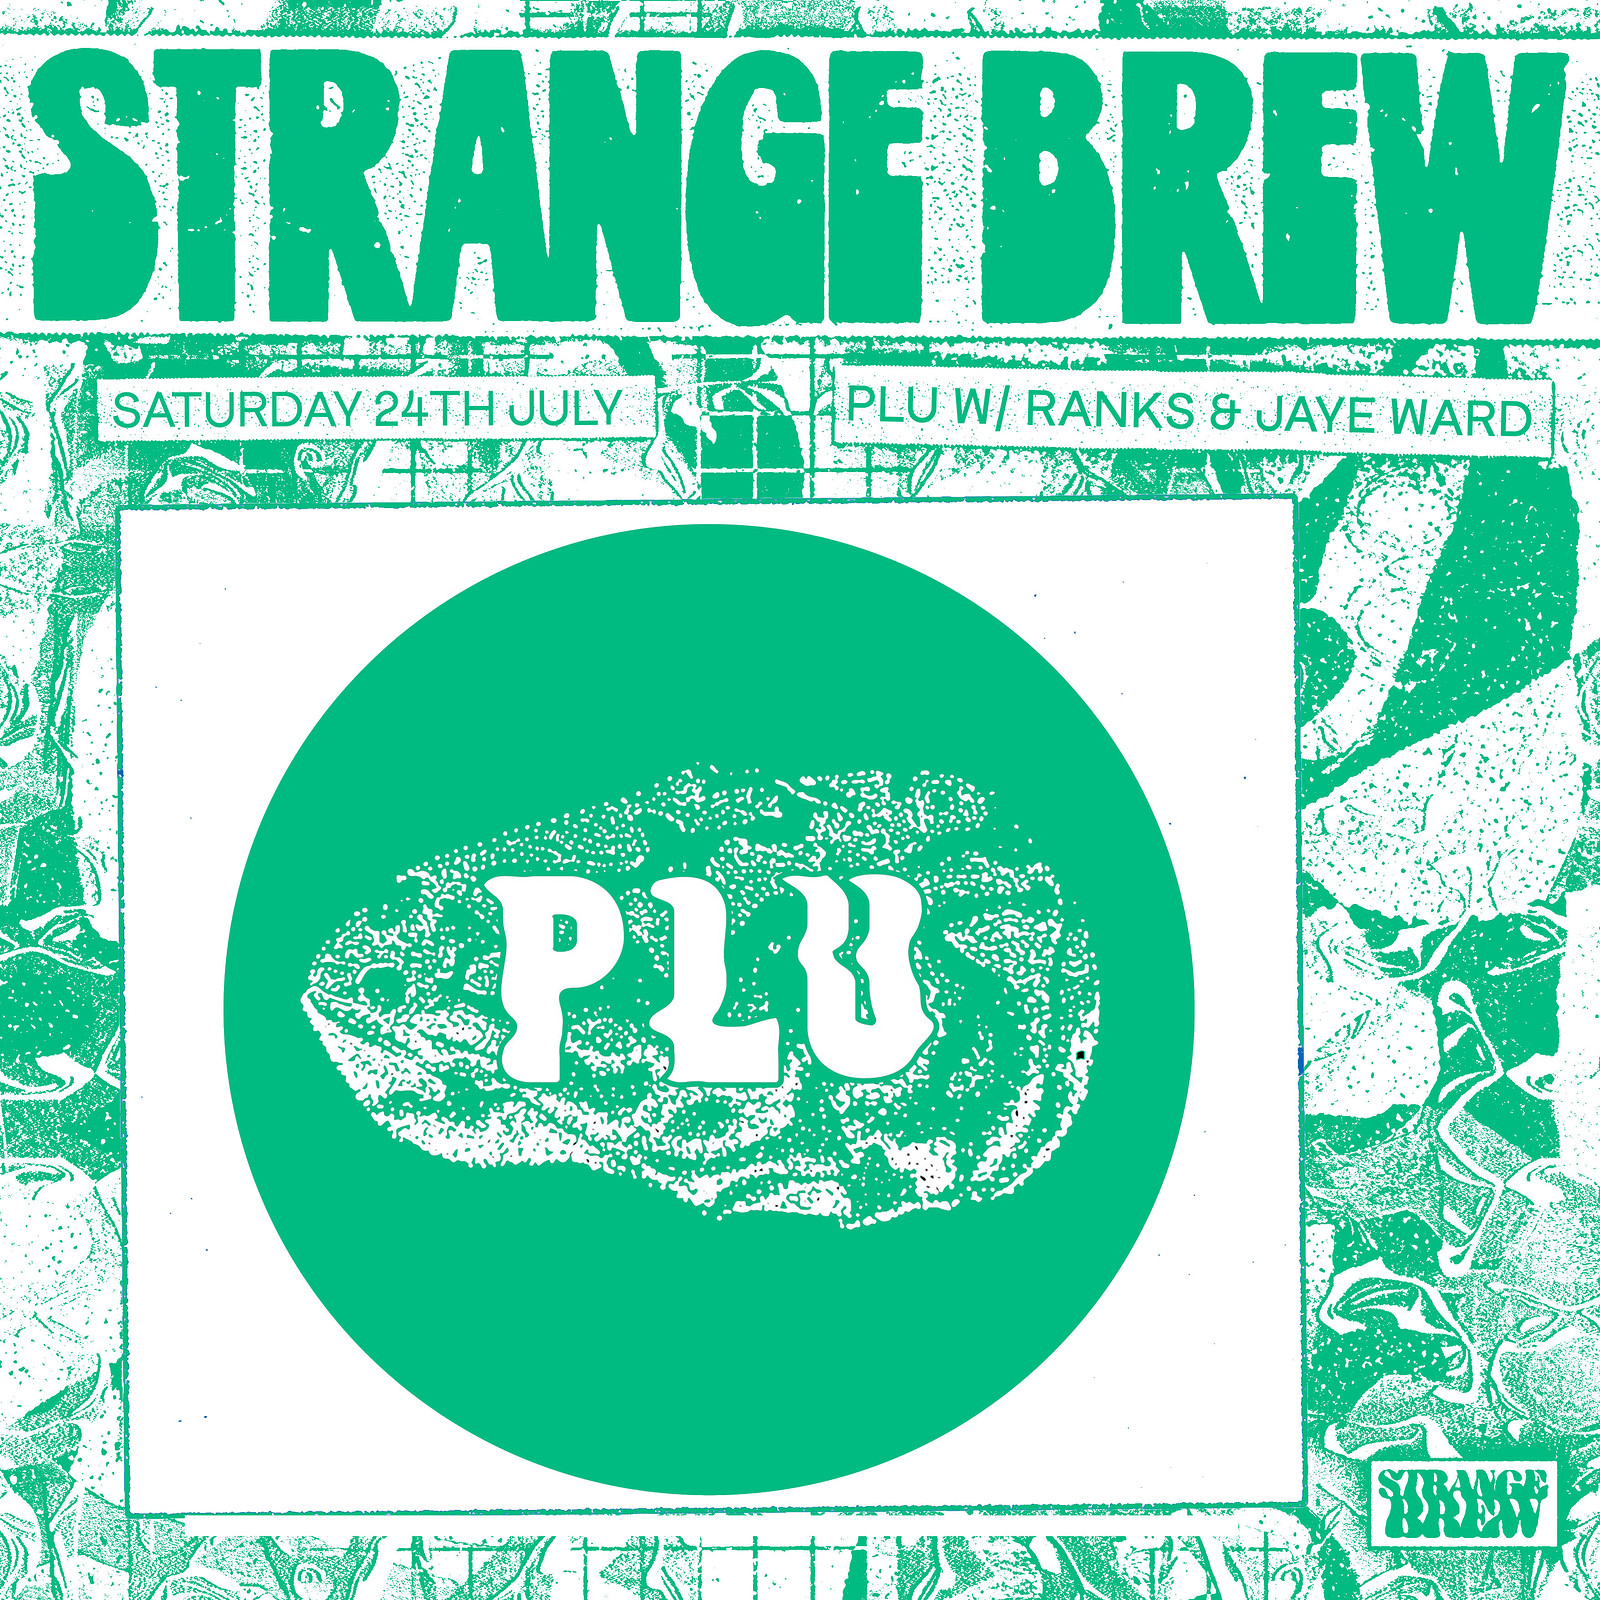 PLU all night at Strange Brew at Strange Brew